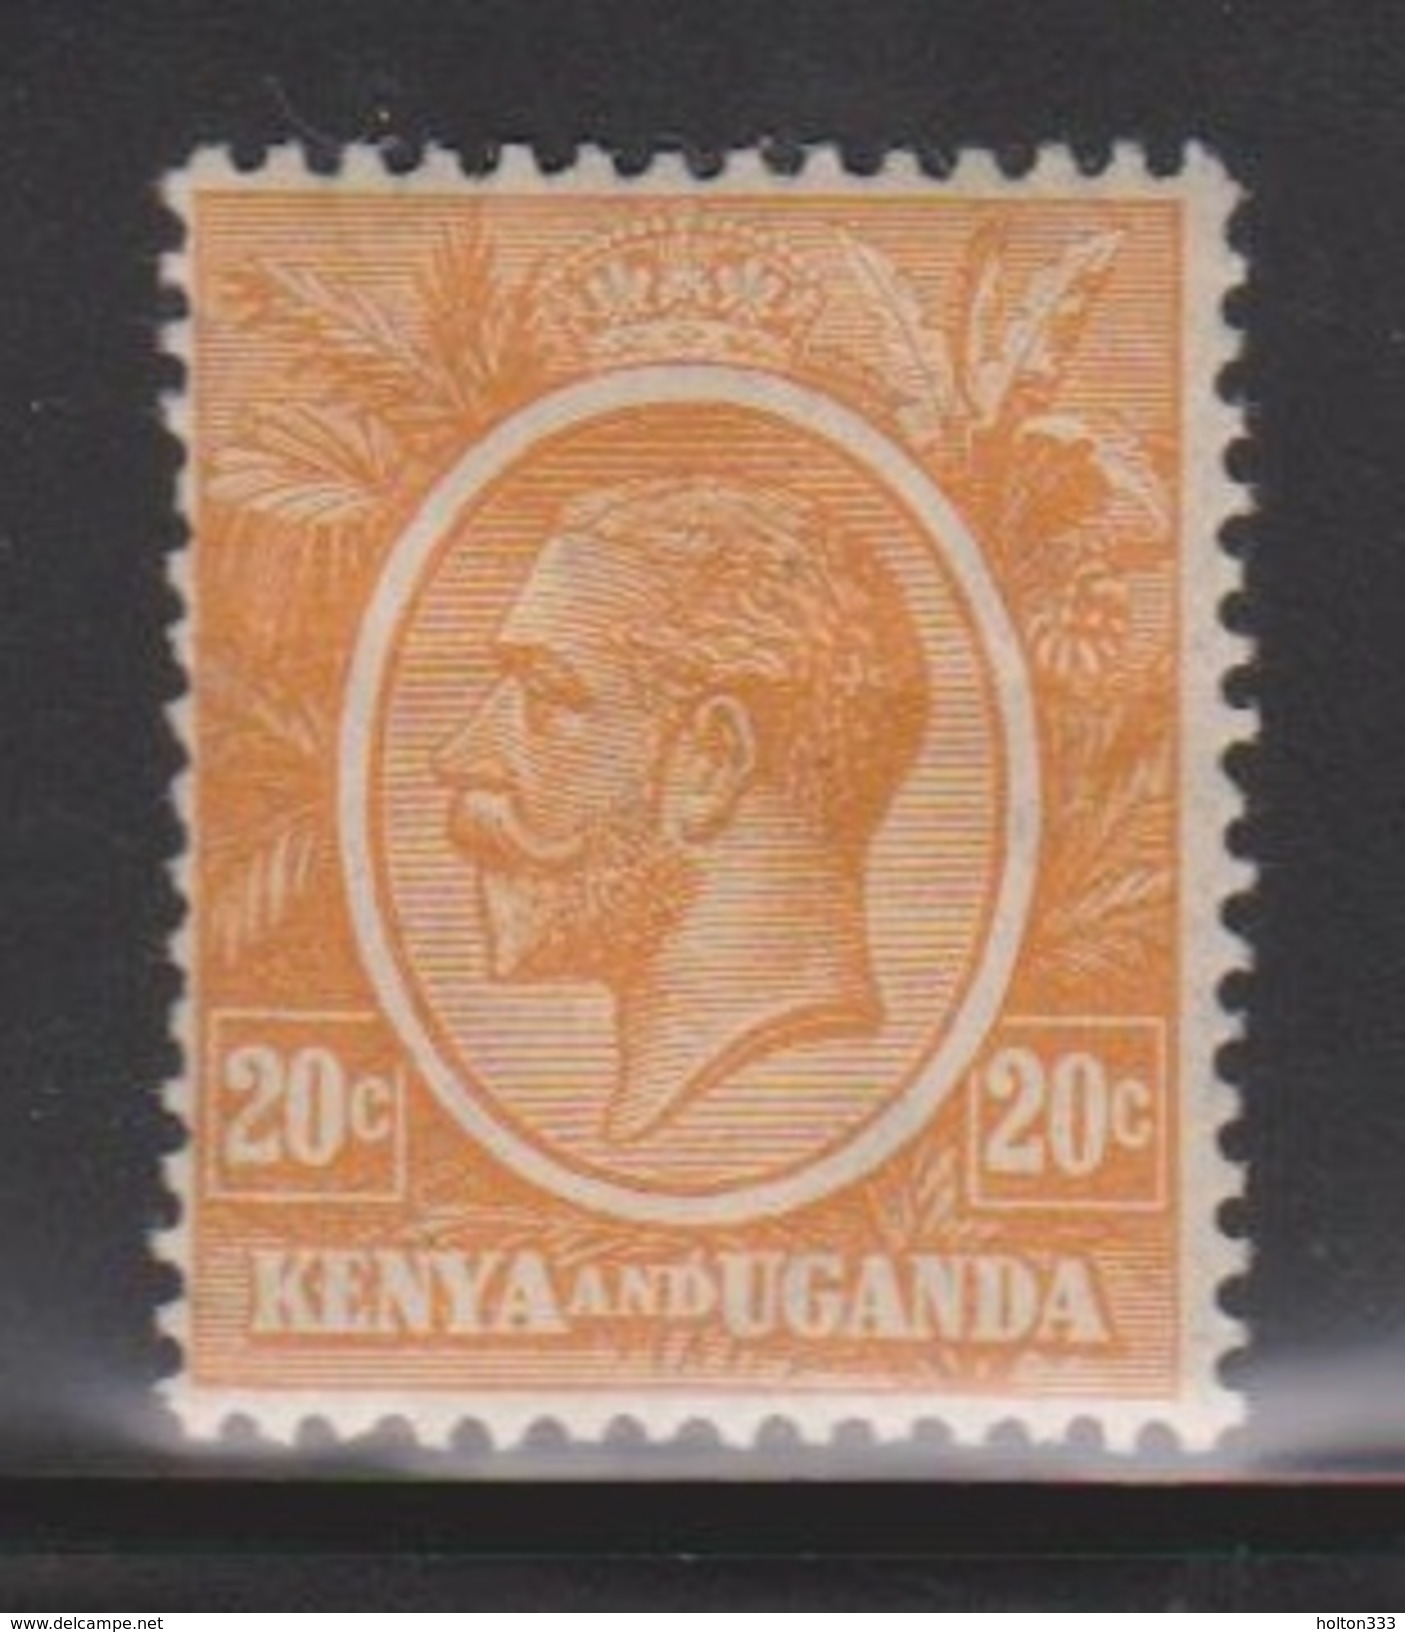 KENYA & UGANDA Scott # 25 MH - KGV - Kenya & Uganda